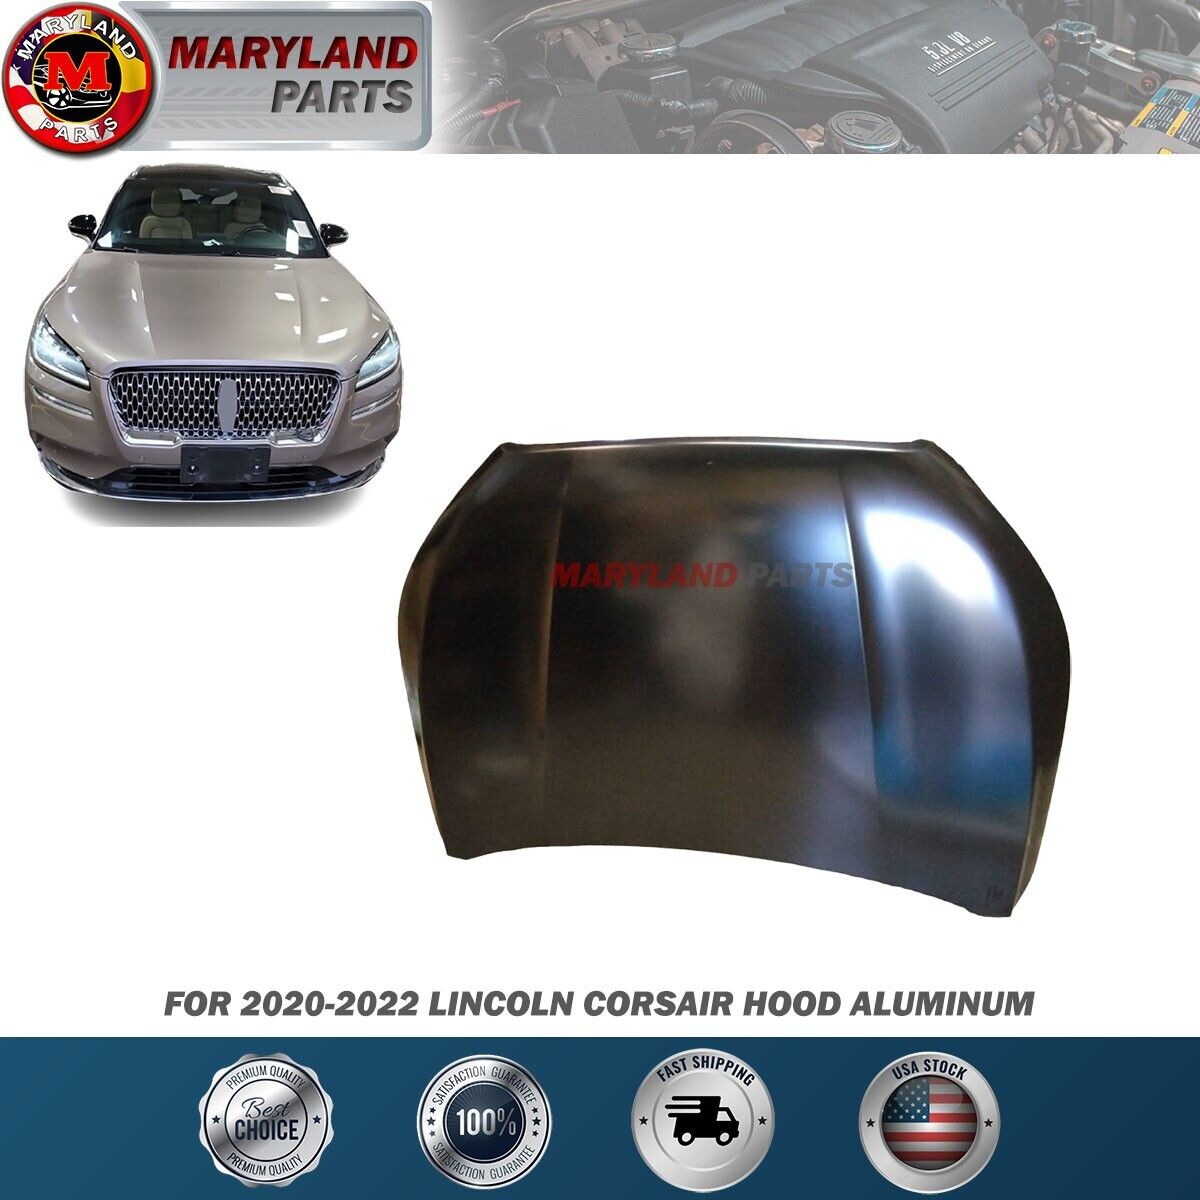 For 2020-2022 Lincoln Corsair Hood Aluminum